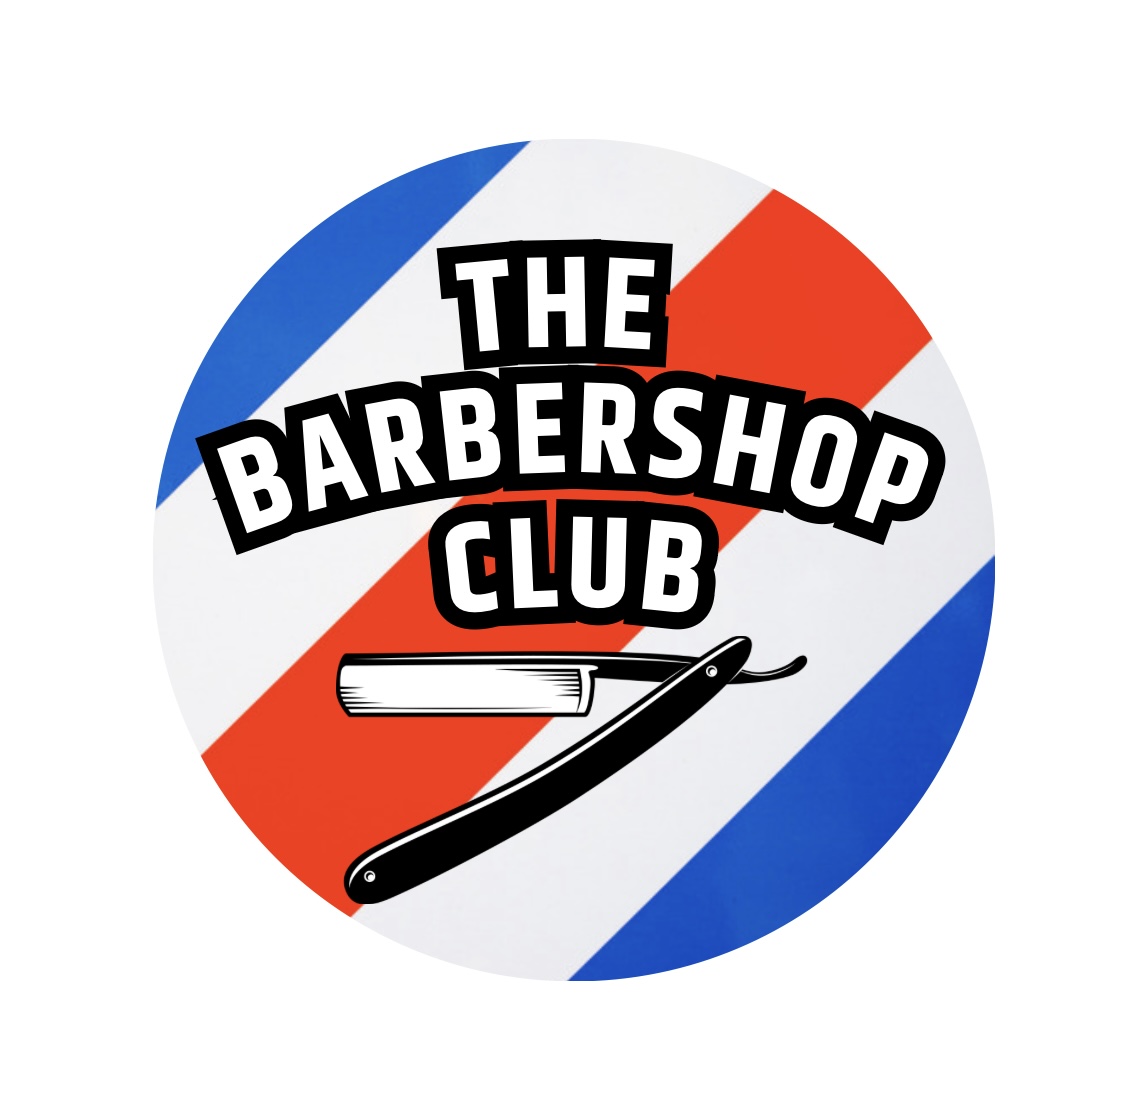 The Barber Shop Club